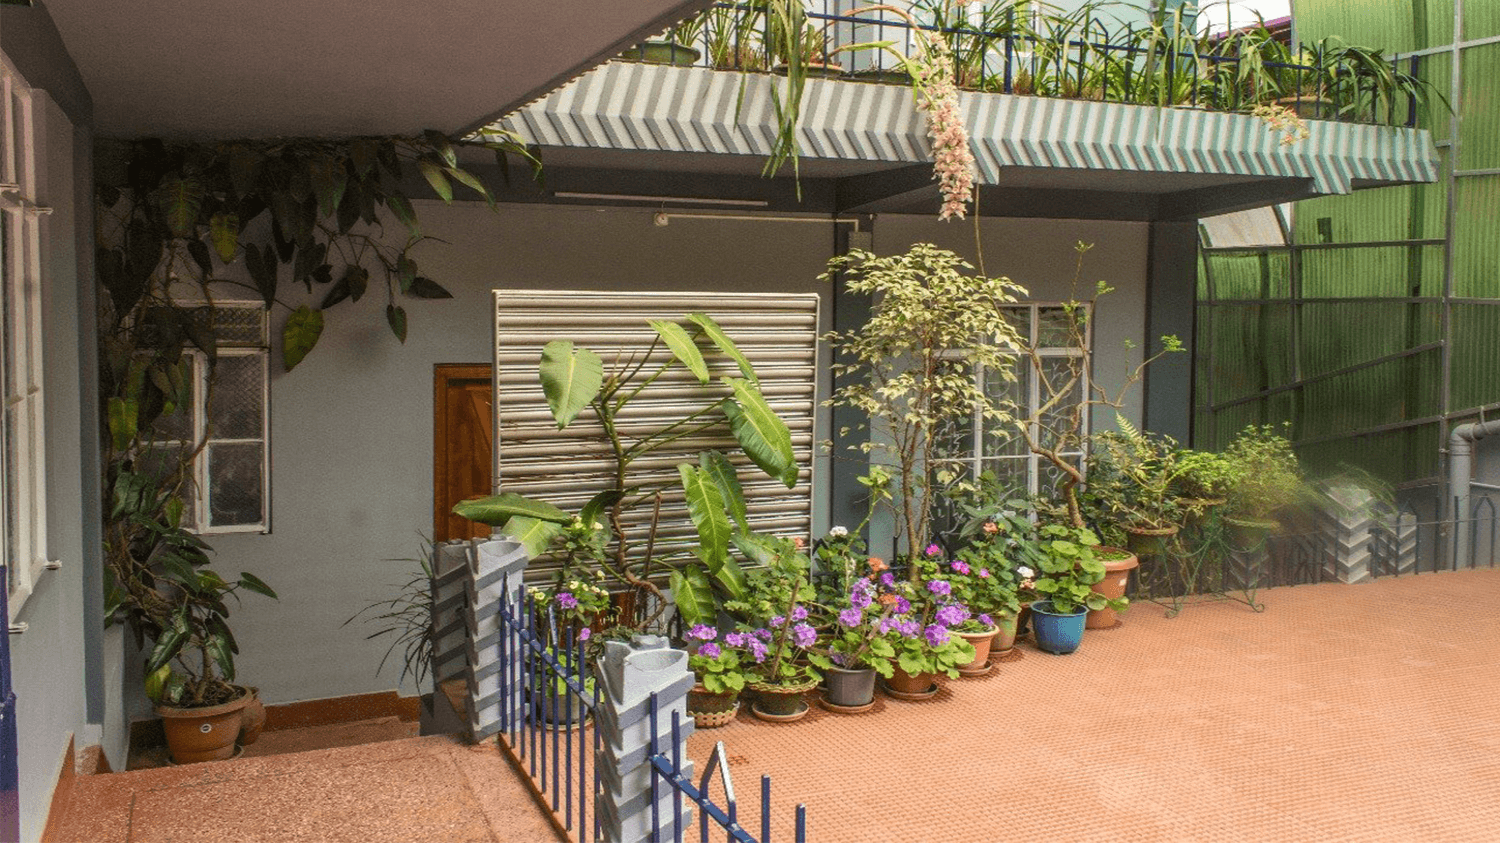 Latei Ville Inn, Shillong, Meghalaya, India